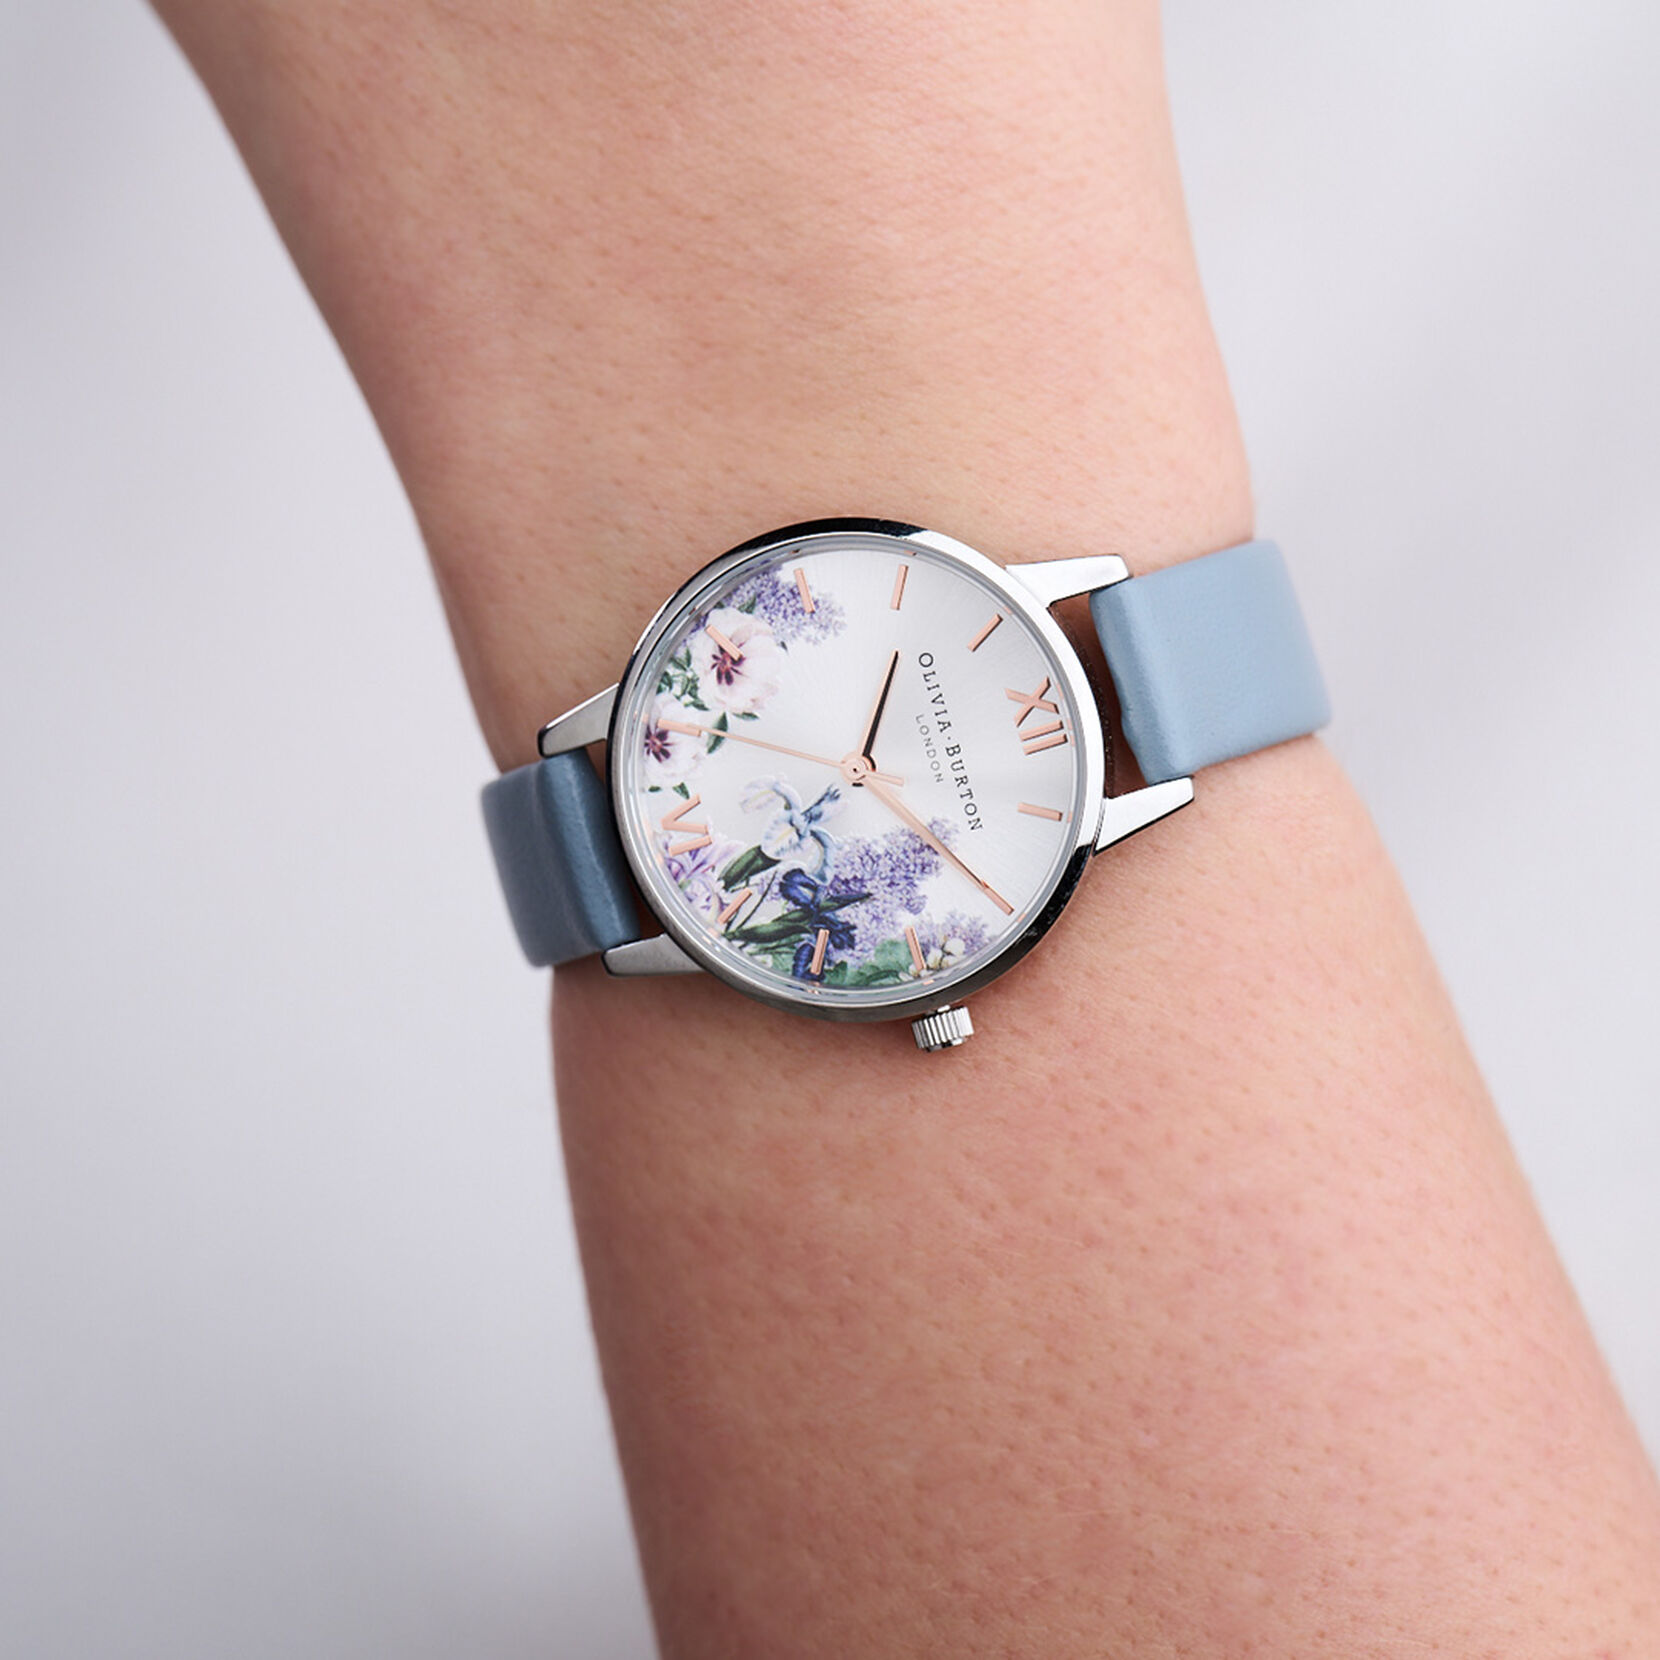 Secret Garden 30mm Silver & Blue Leather Strap Watch